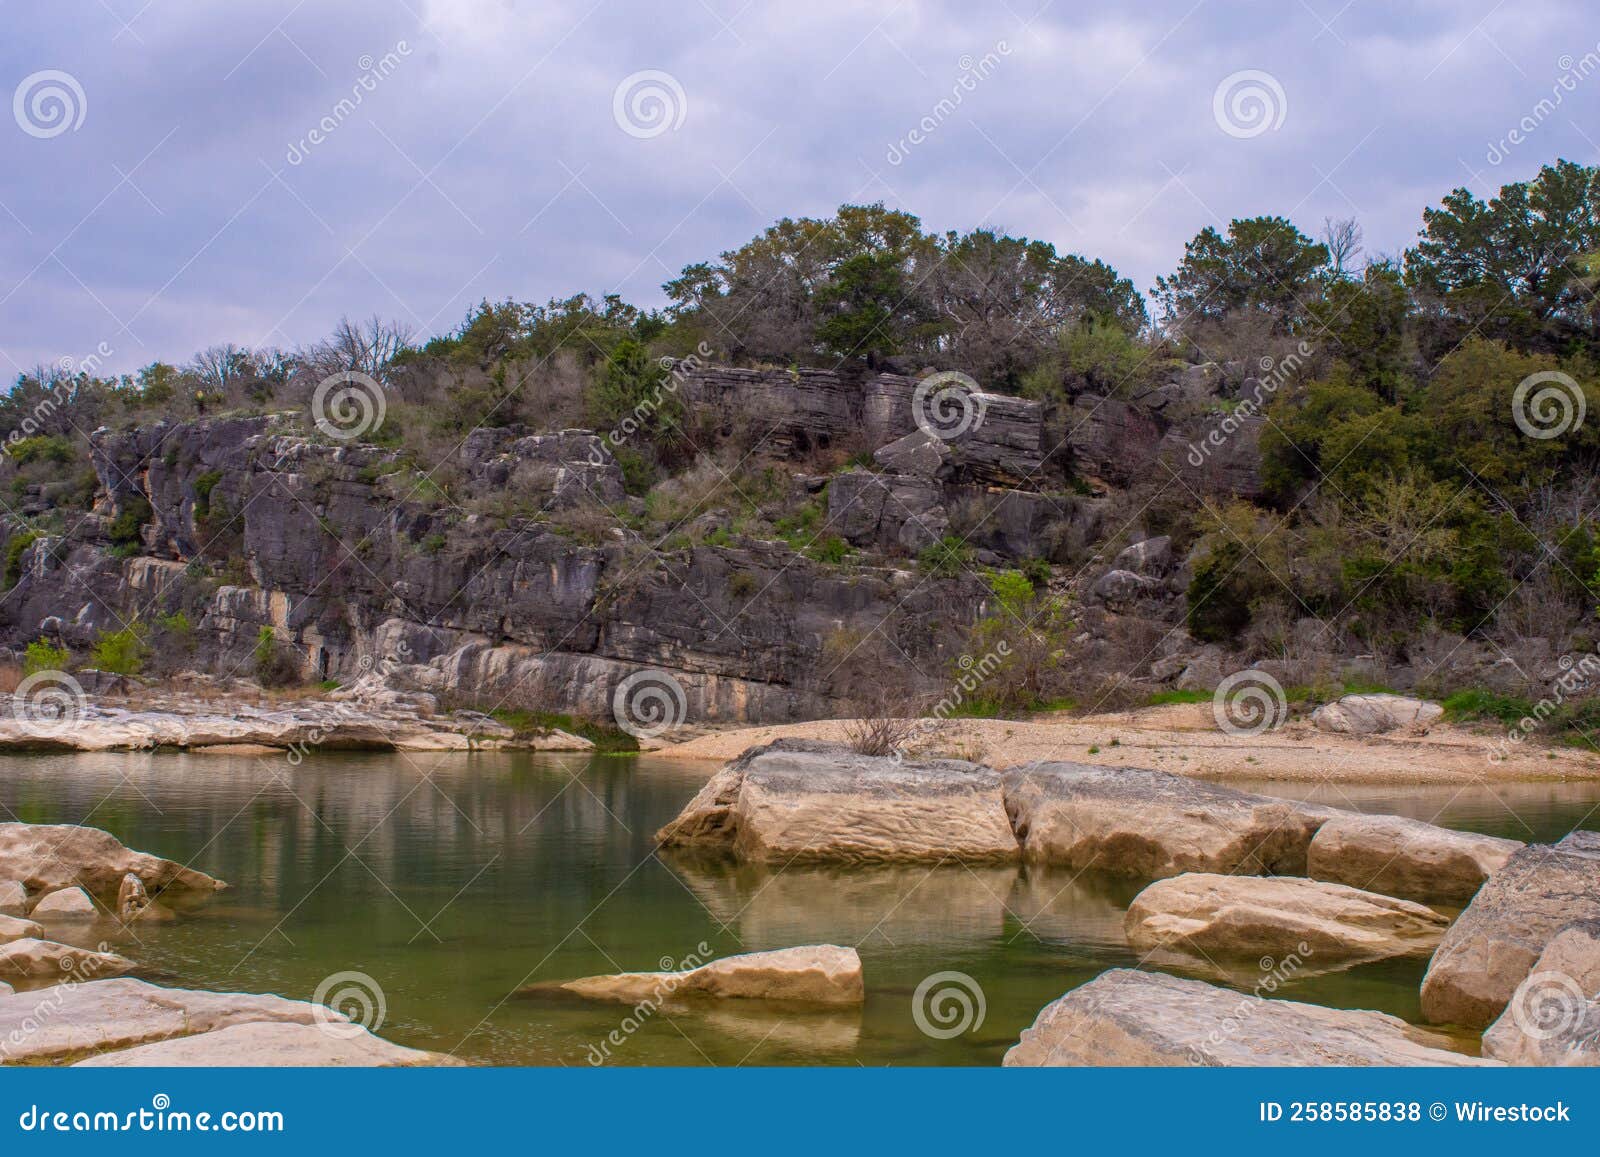 lake with big stones and rocks in the background, gunlom waterfall creek, australia